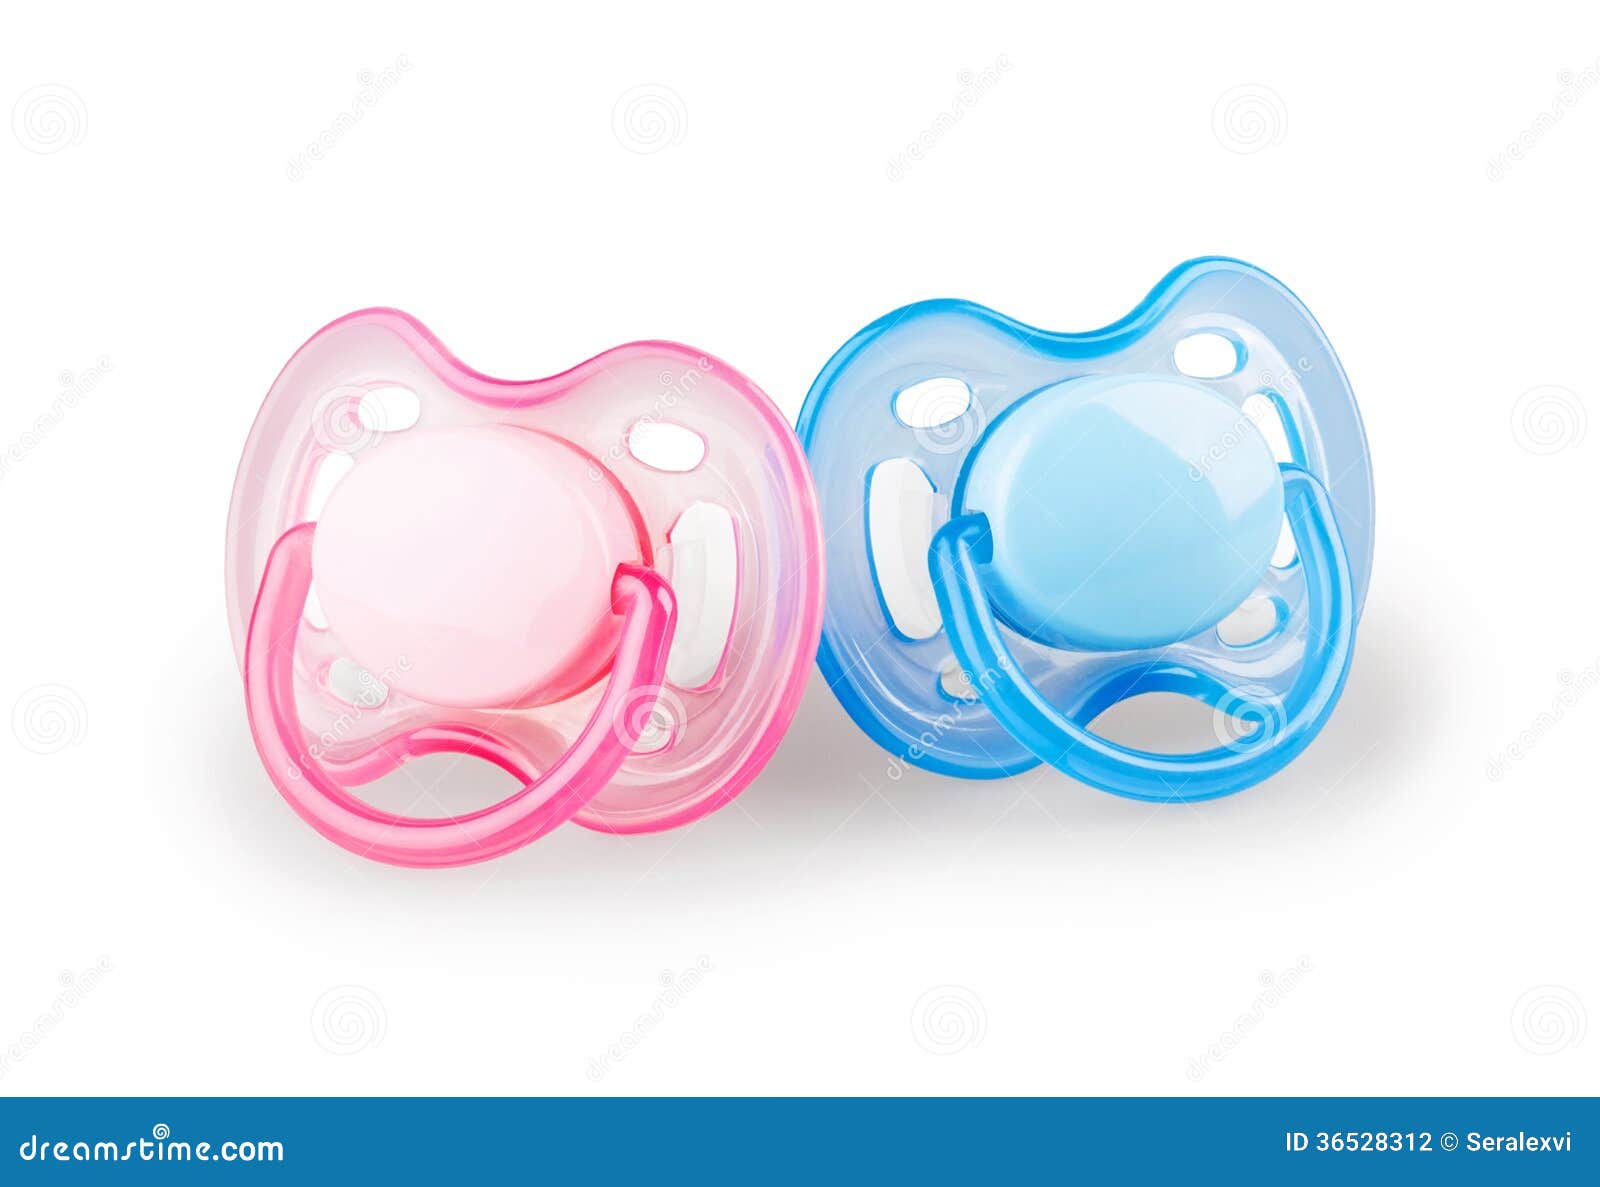 Baby dummy stock photo. Image of pink, plastic, teething - 36528312